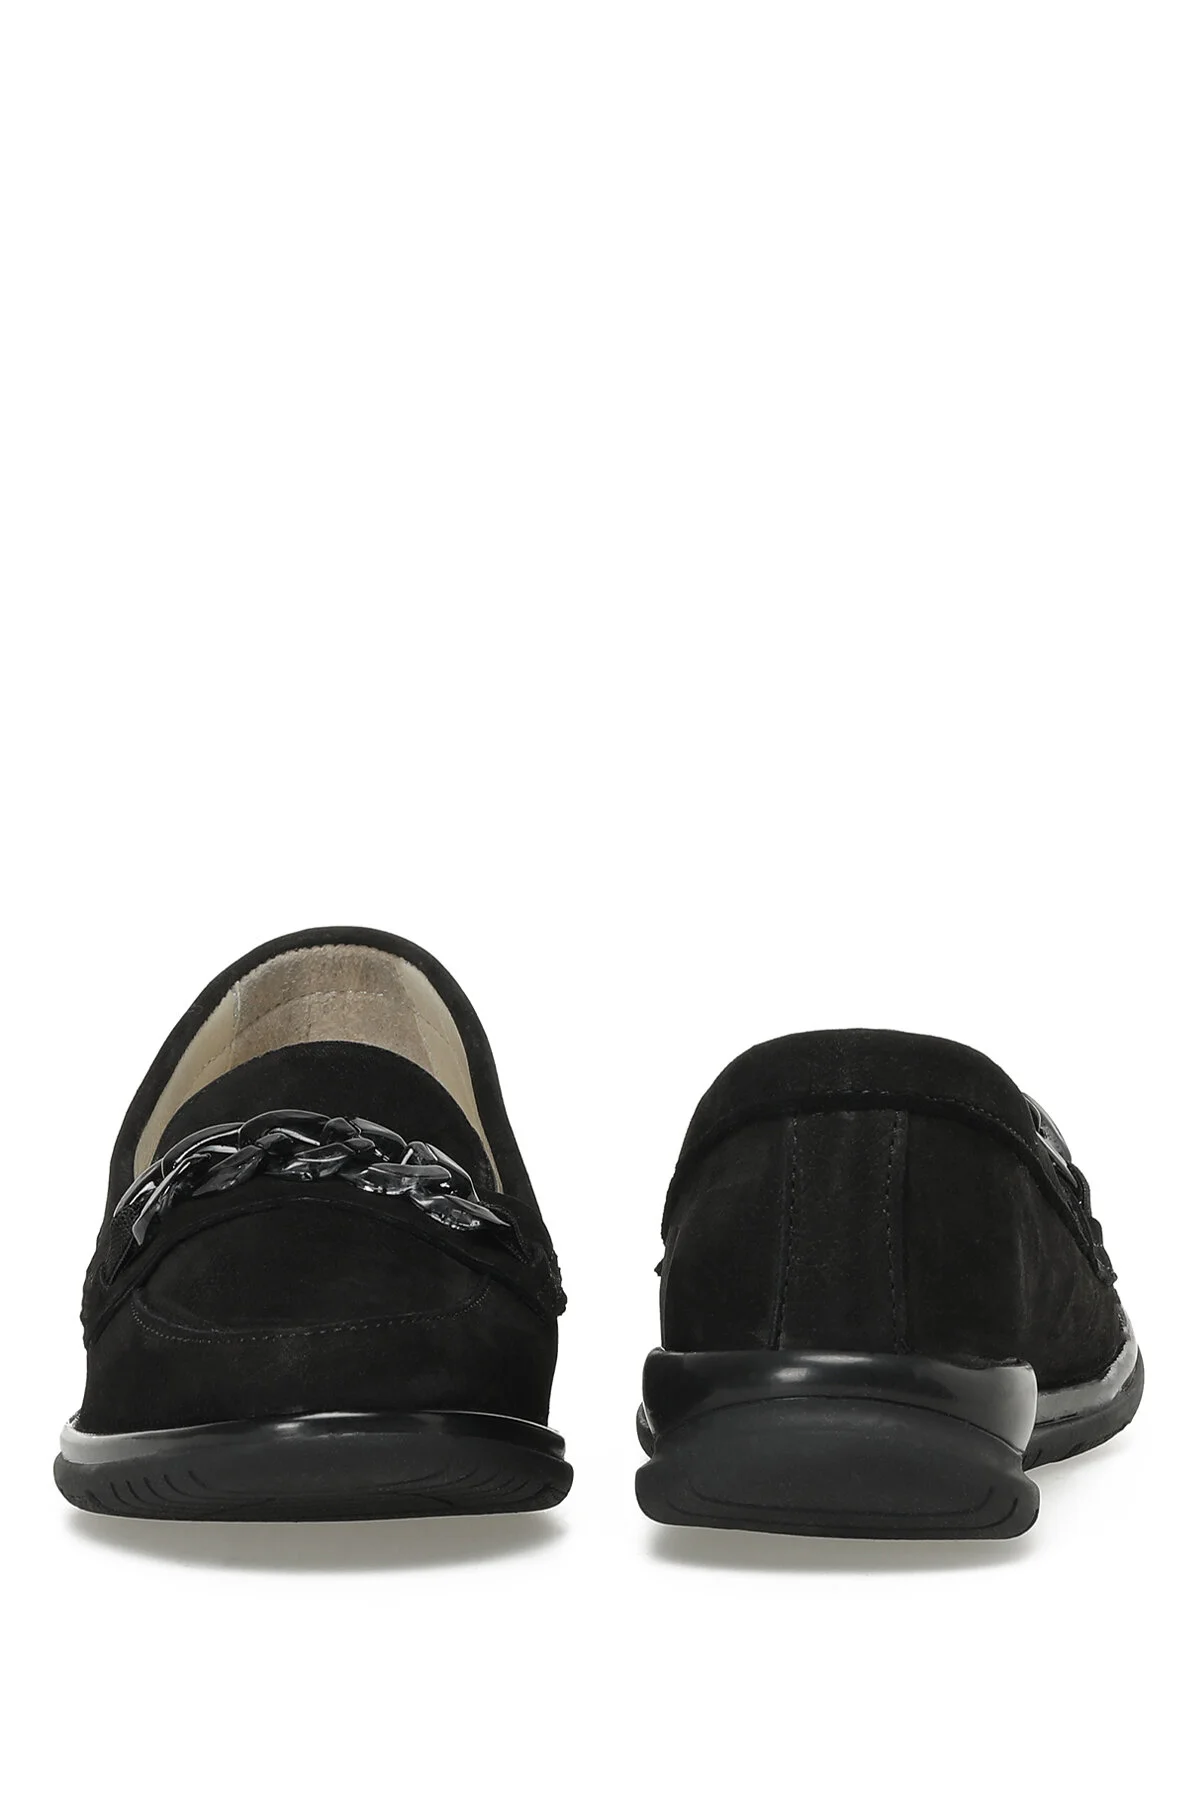 LIDO 3FX Kadın Loafer Düz Ayakkabı-Siyah - Thumbnail